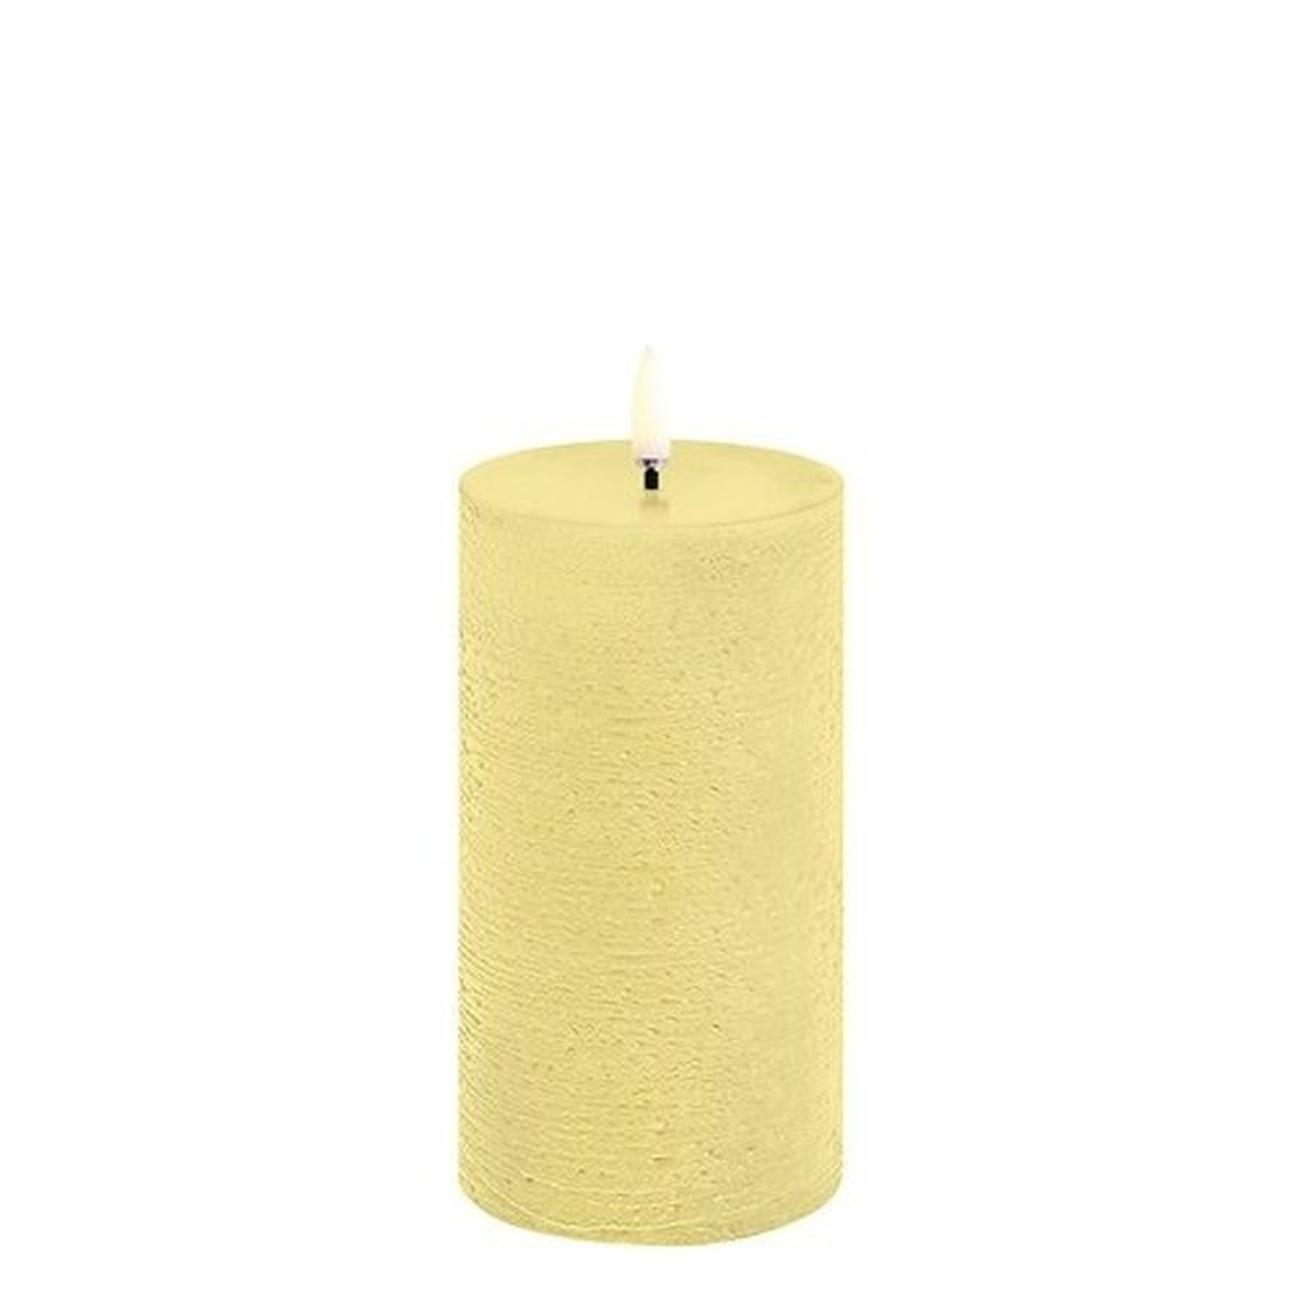 uyuni-led-candle-7-8x15-2cm-wheat-yellow-rustic - Uyuni Lighting Led Pillar Candle Wheat Yellow Rustic 7.8x15.2cm